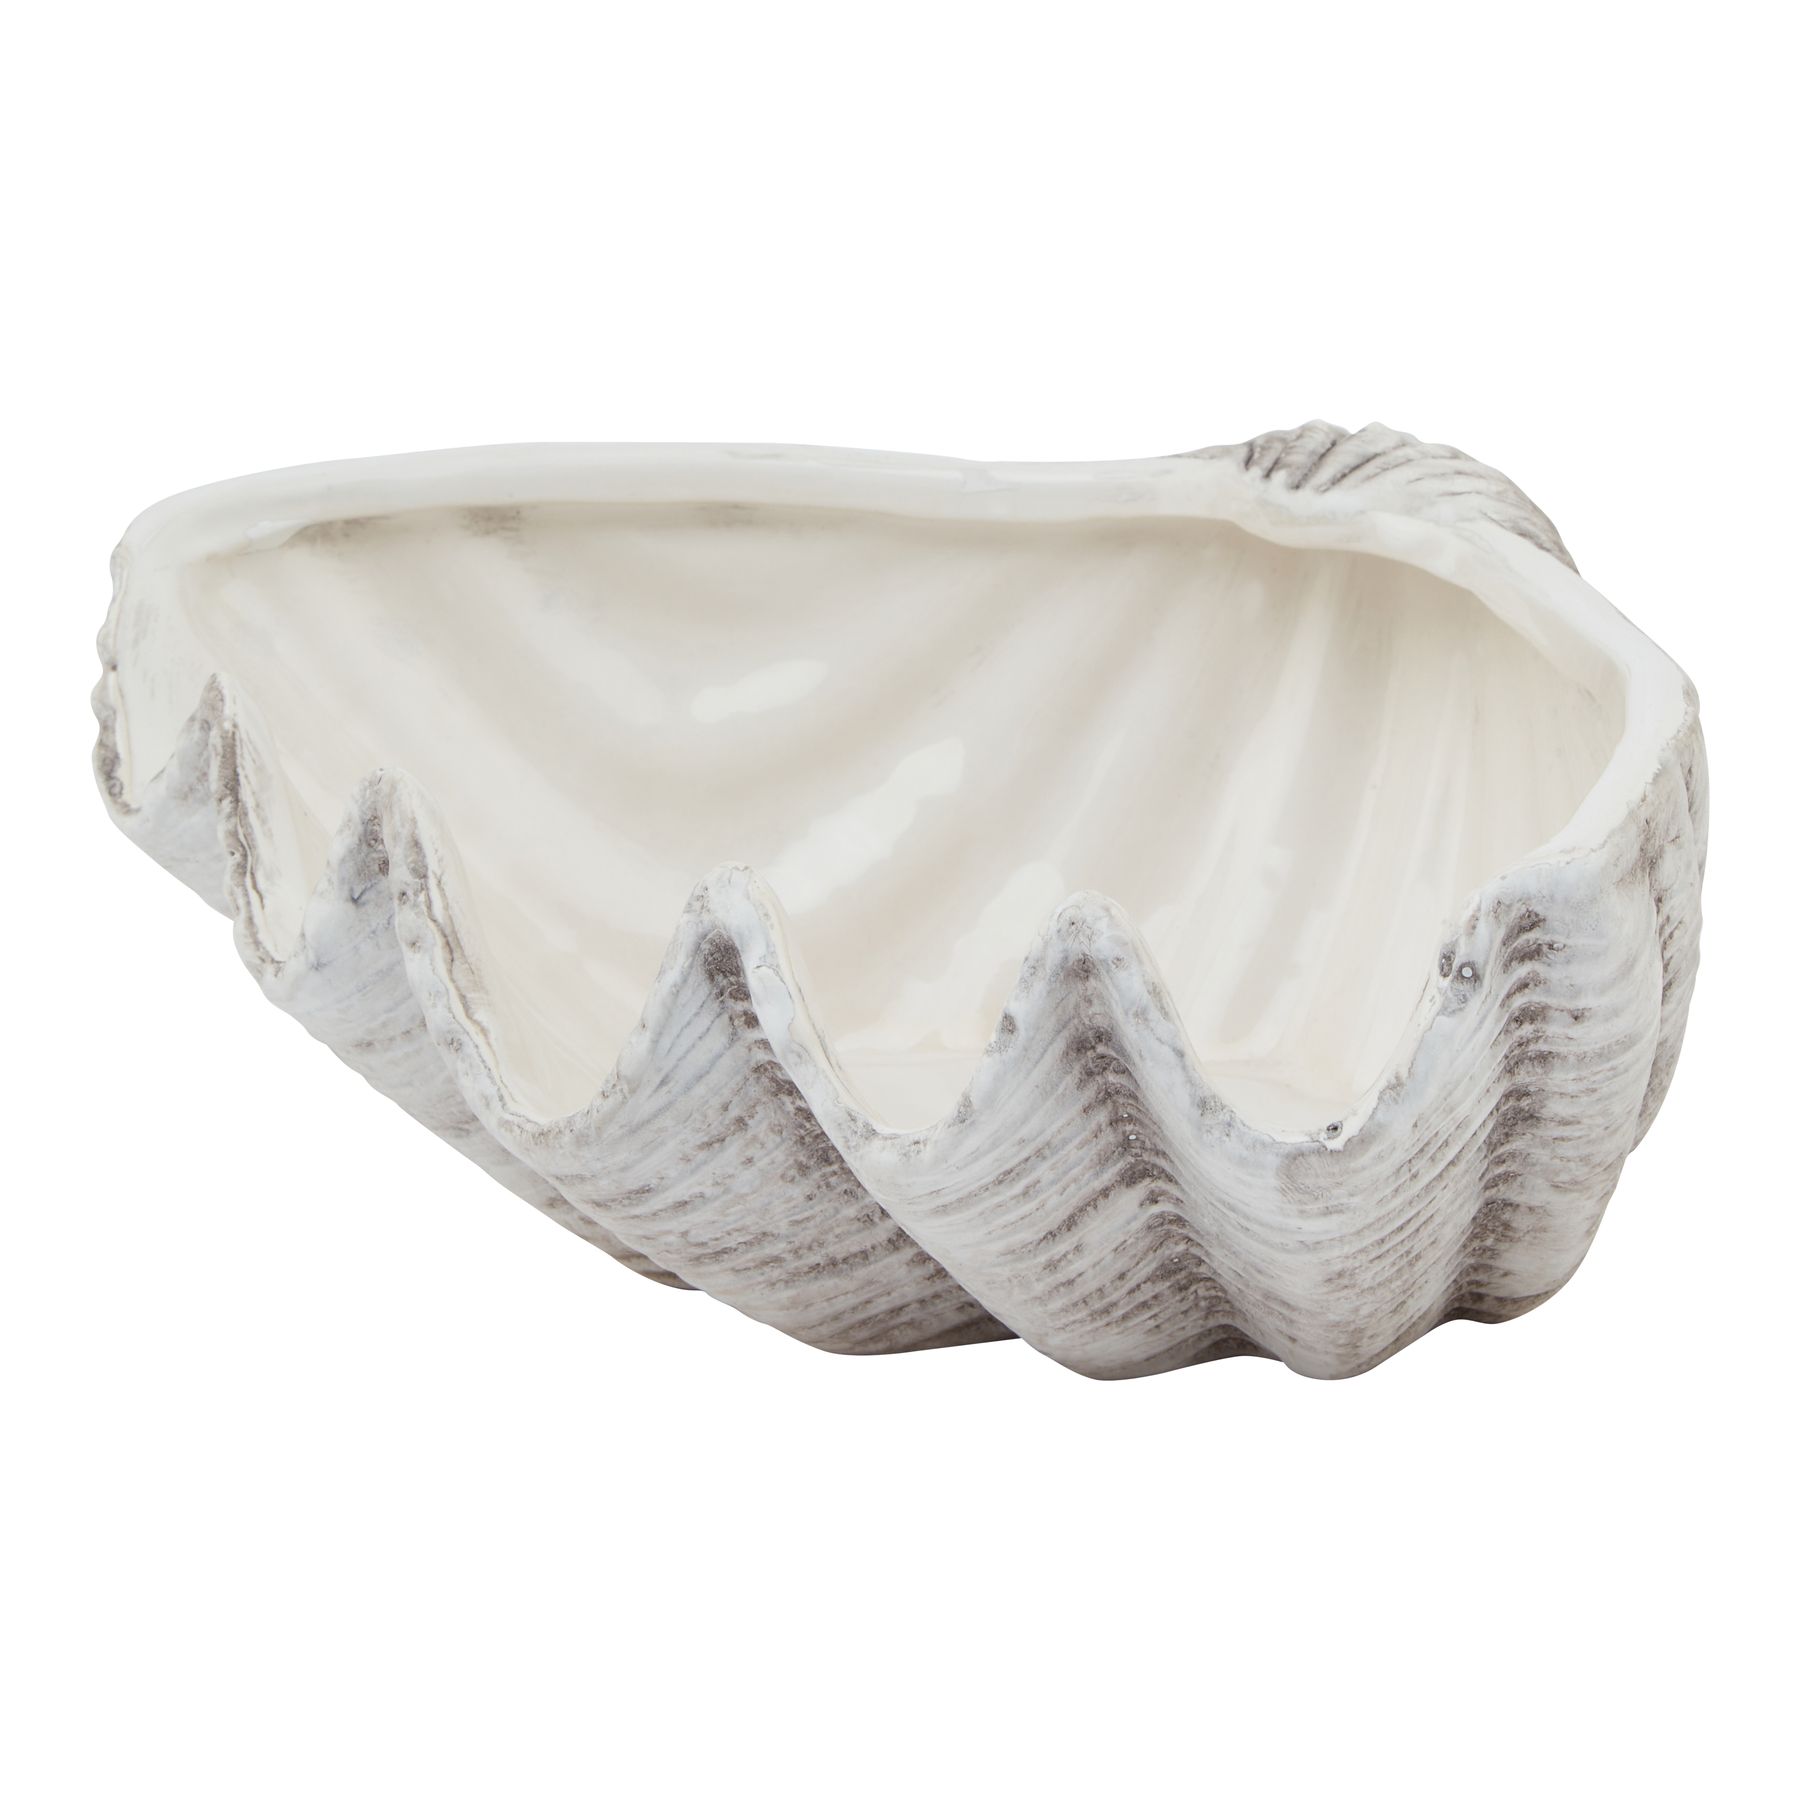 Siren Medium Ceramic Shell Bowl - Image 1